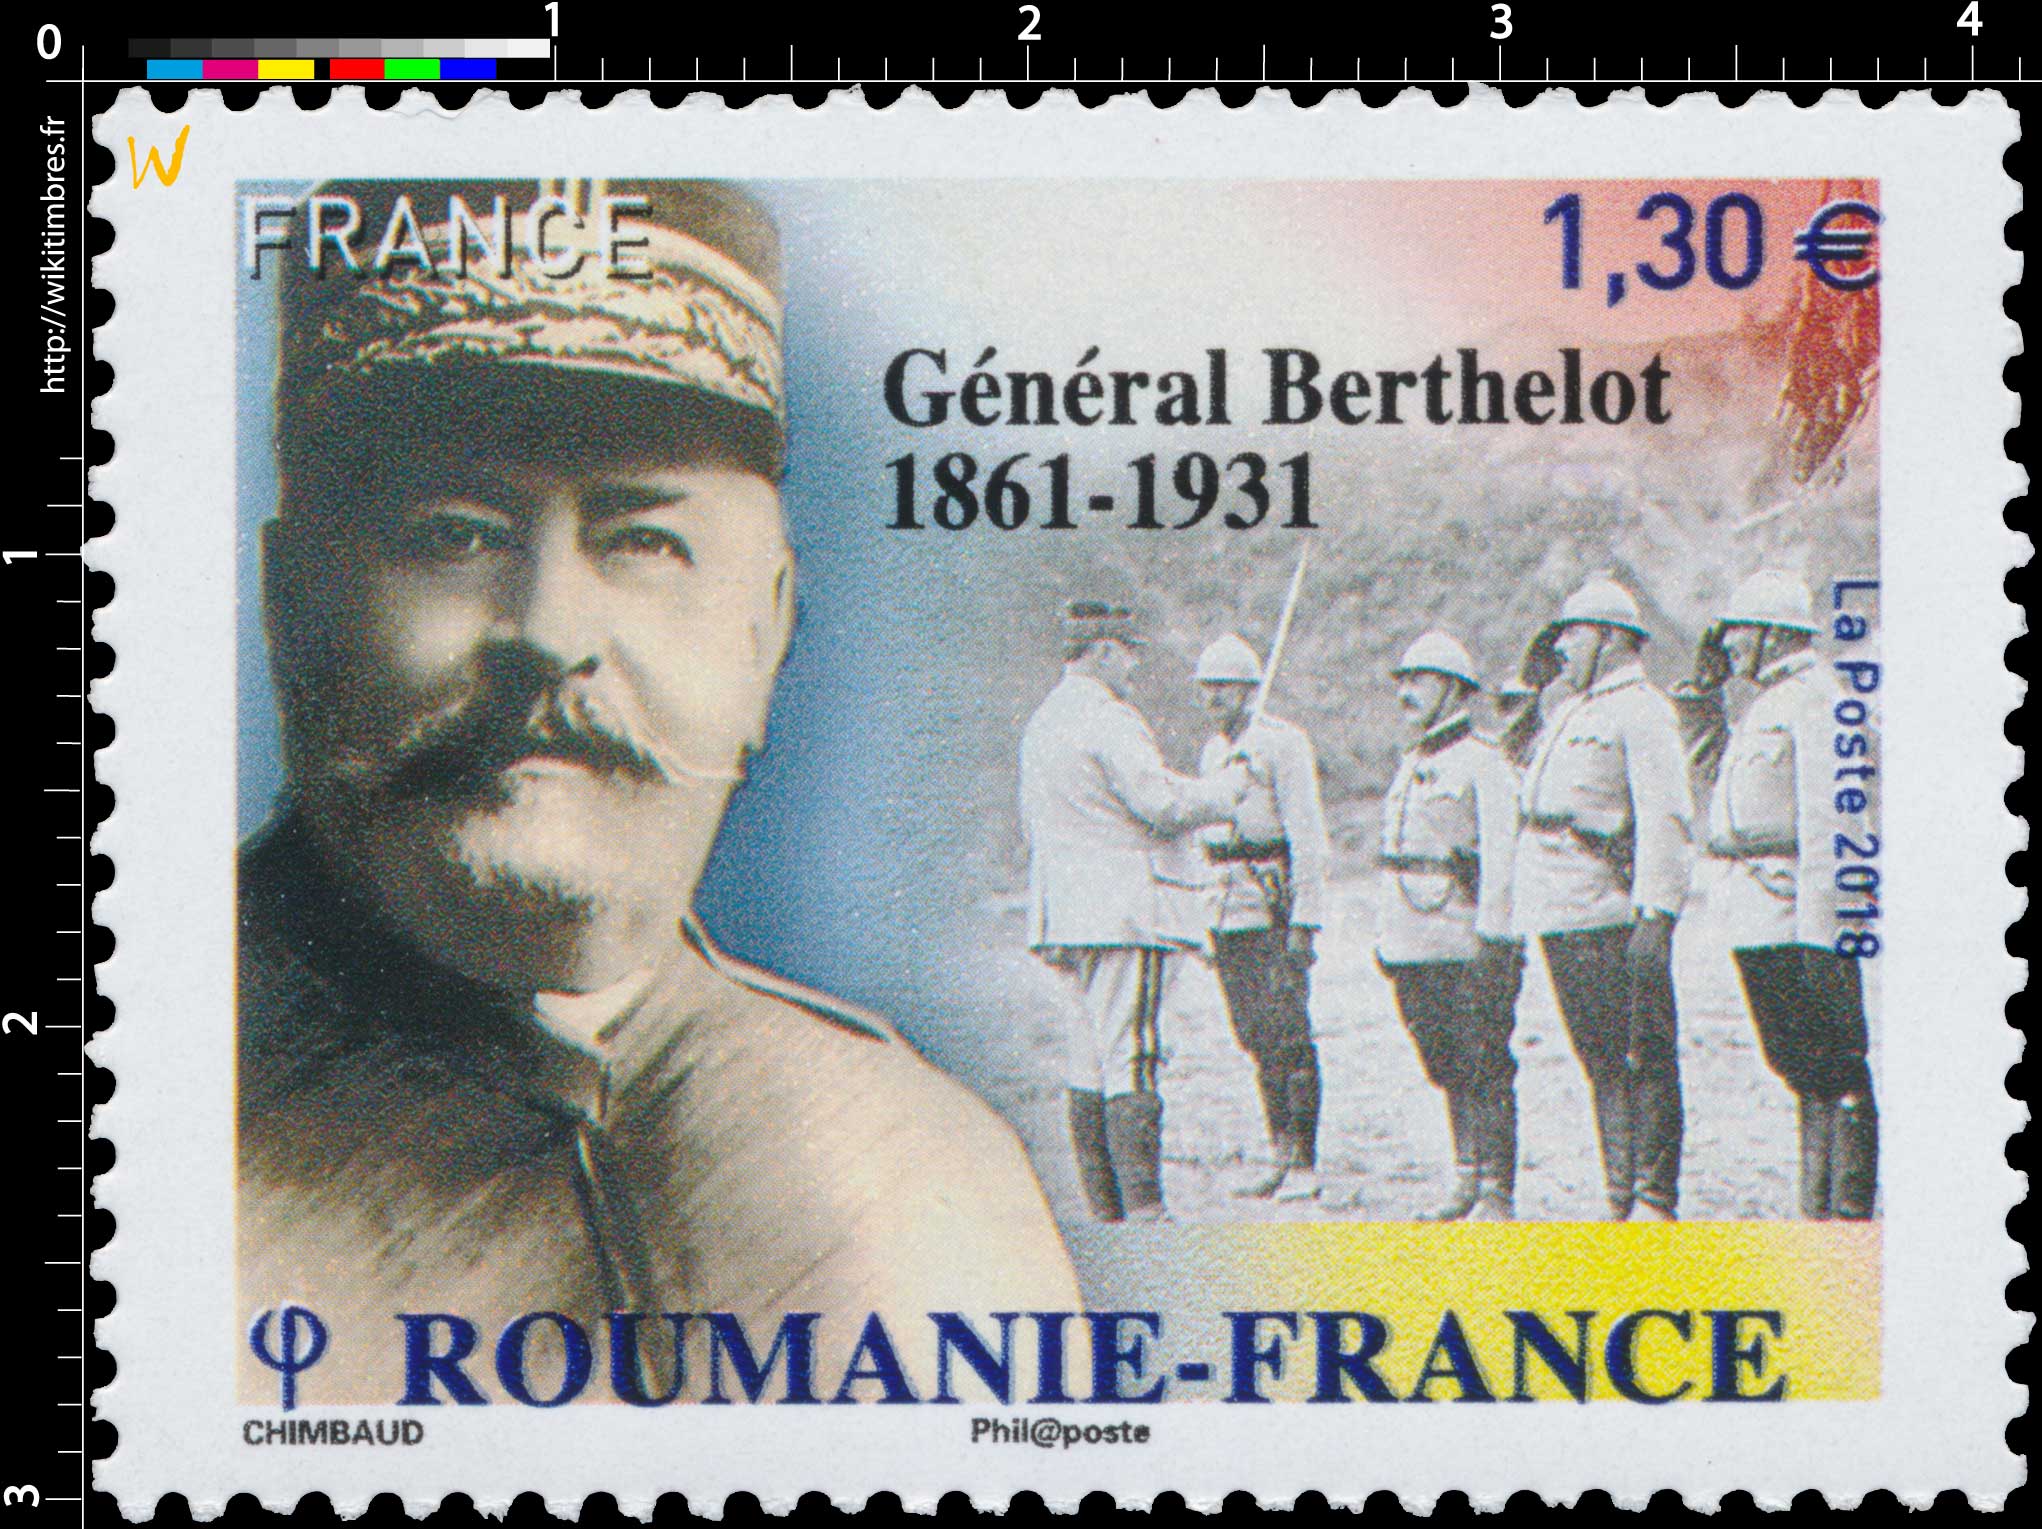 2018 Roumanie - France  - Général Berthelot 1861 -1931